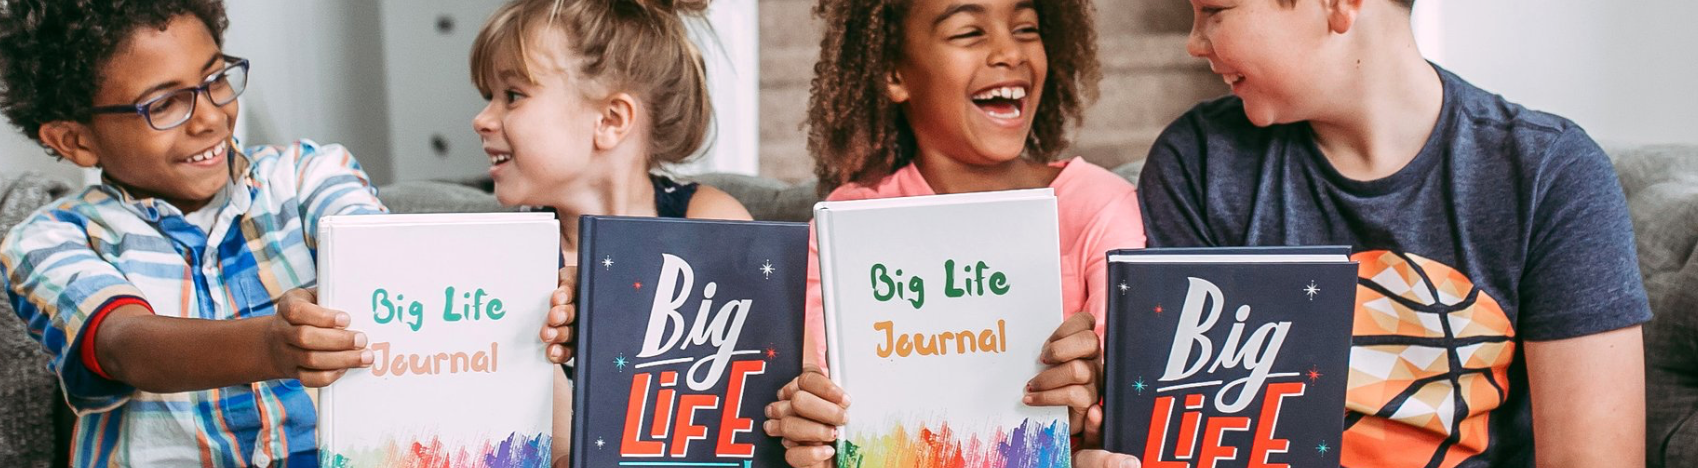 Big Life Journal  Teaching Teens Valuable Life Skills - Lady Jacqueline